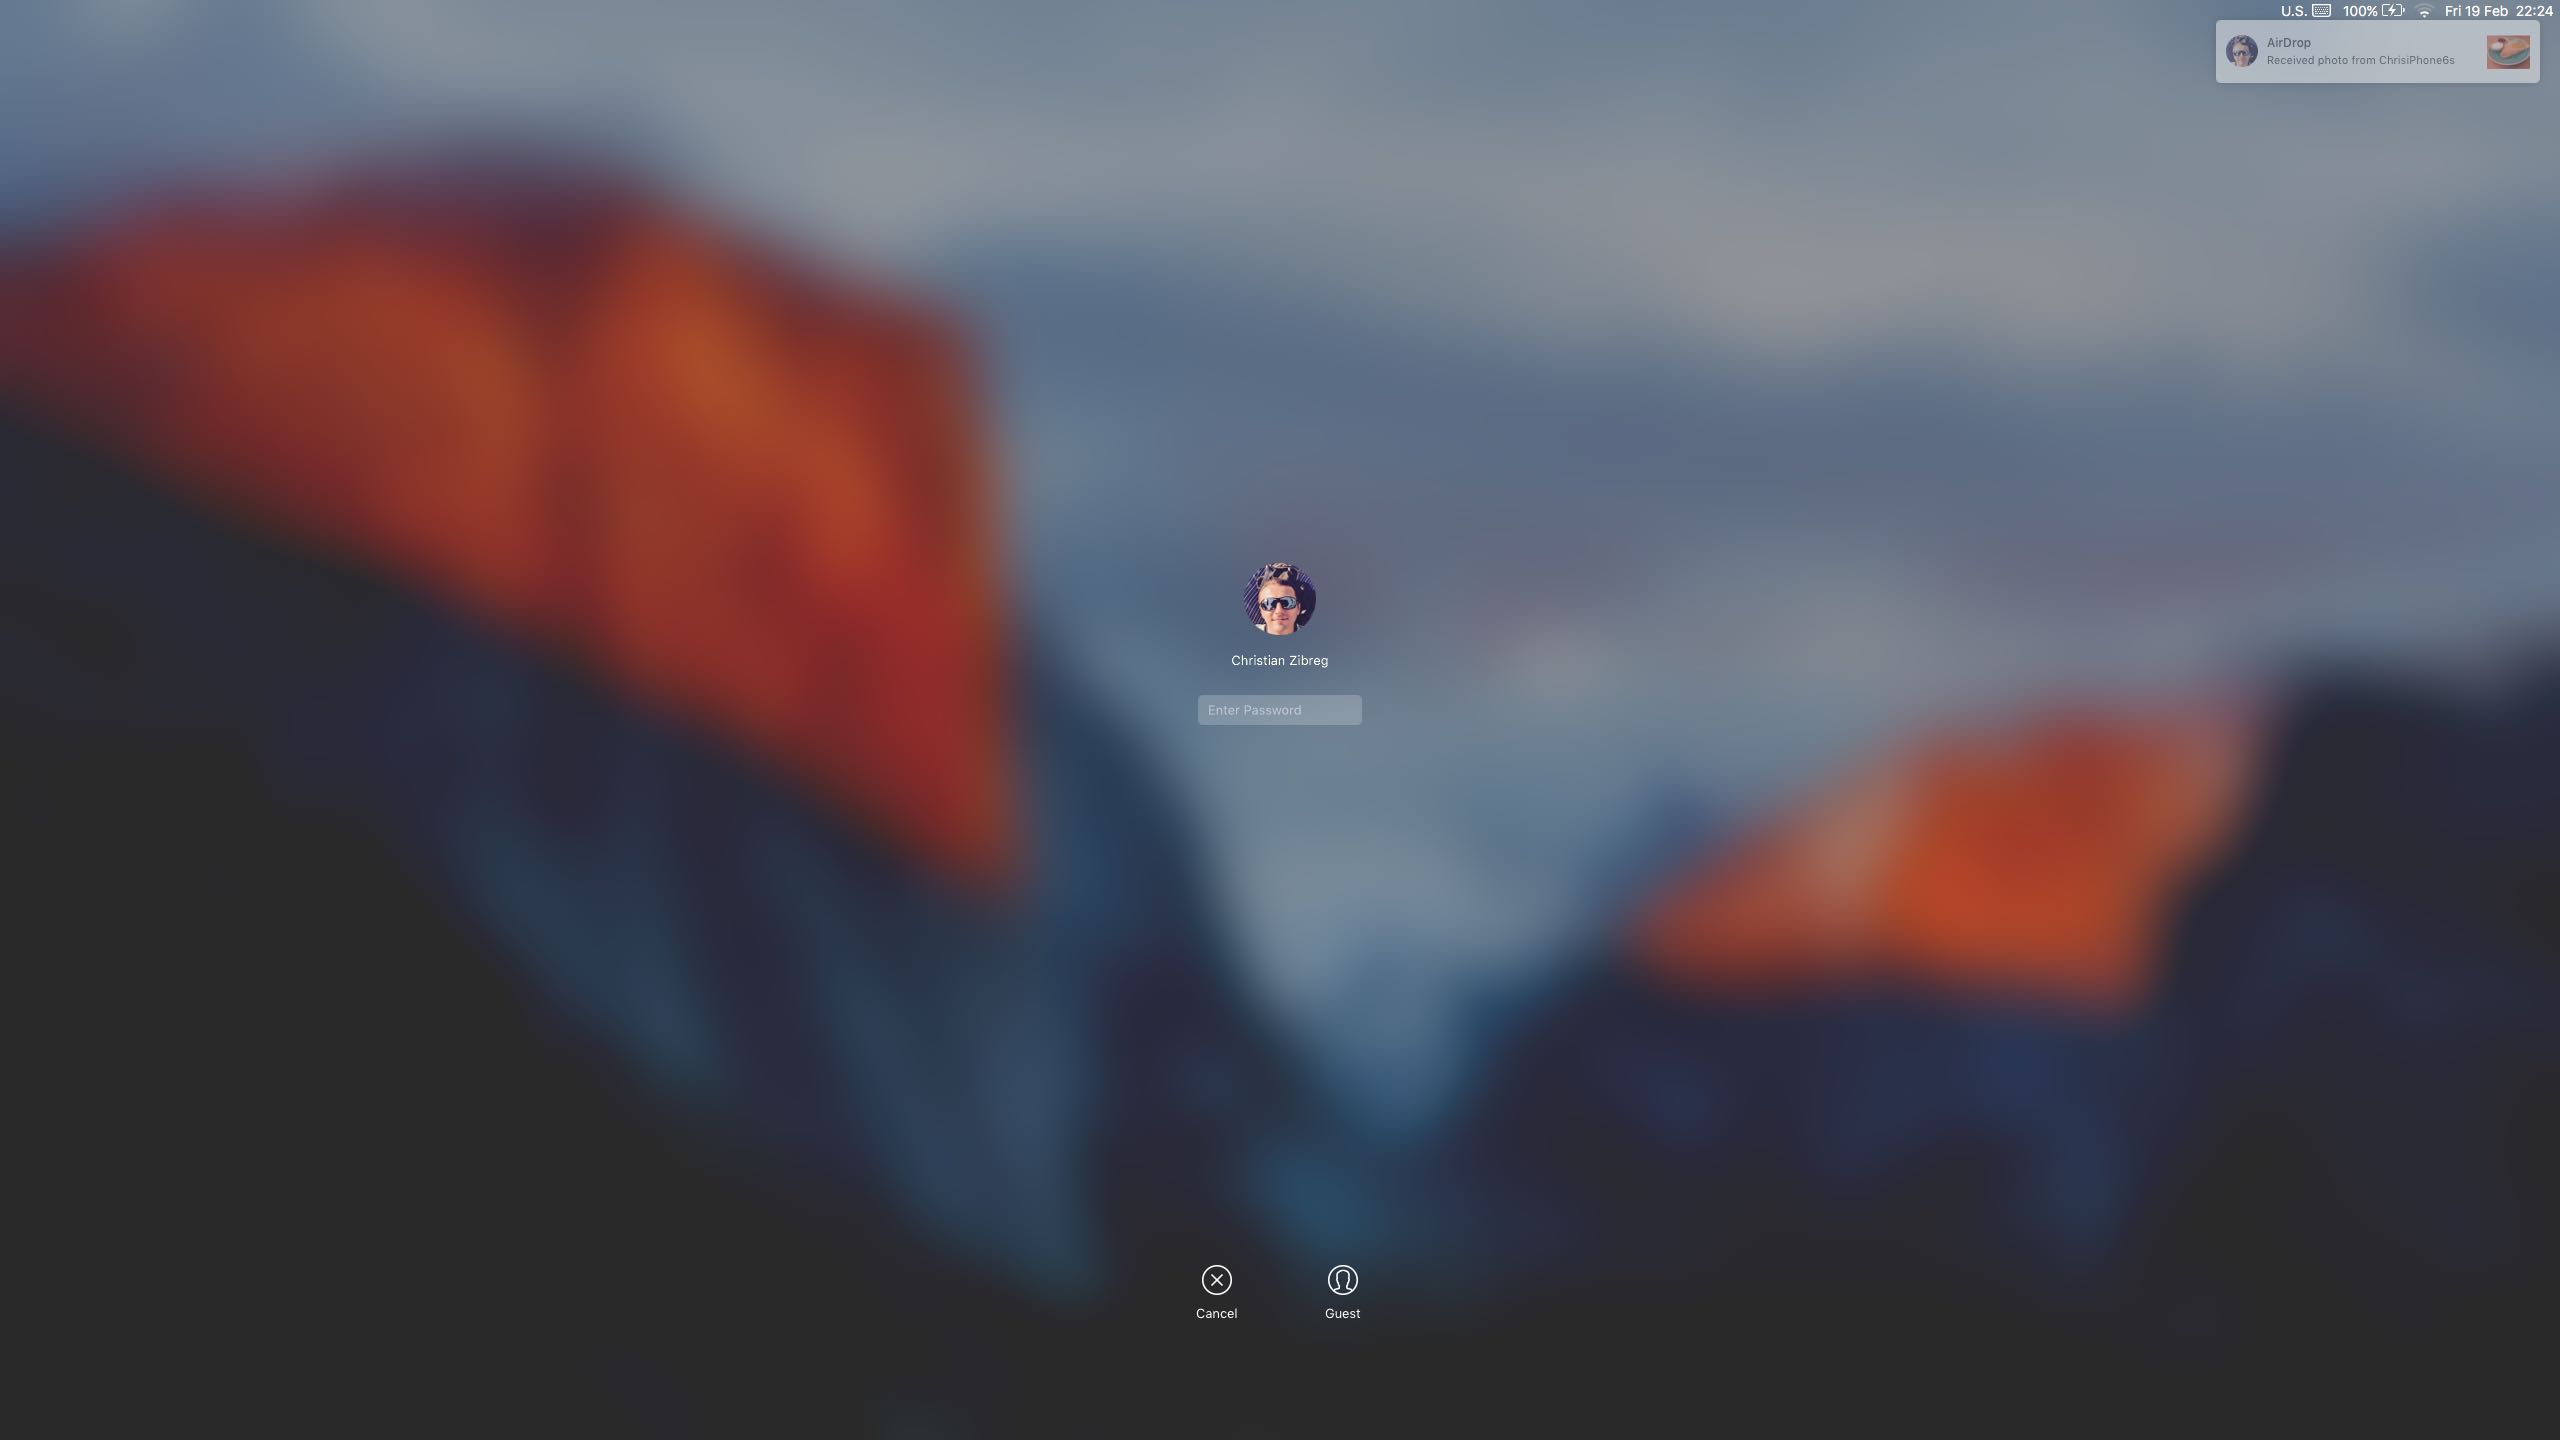 OS X El Capitan AirDrop notification Lock screen Mac screenshot 004